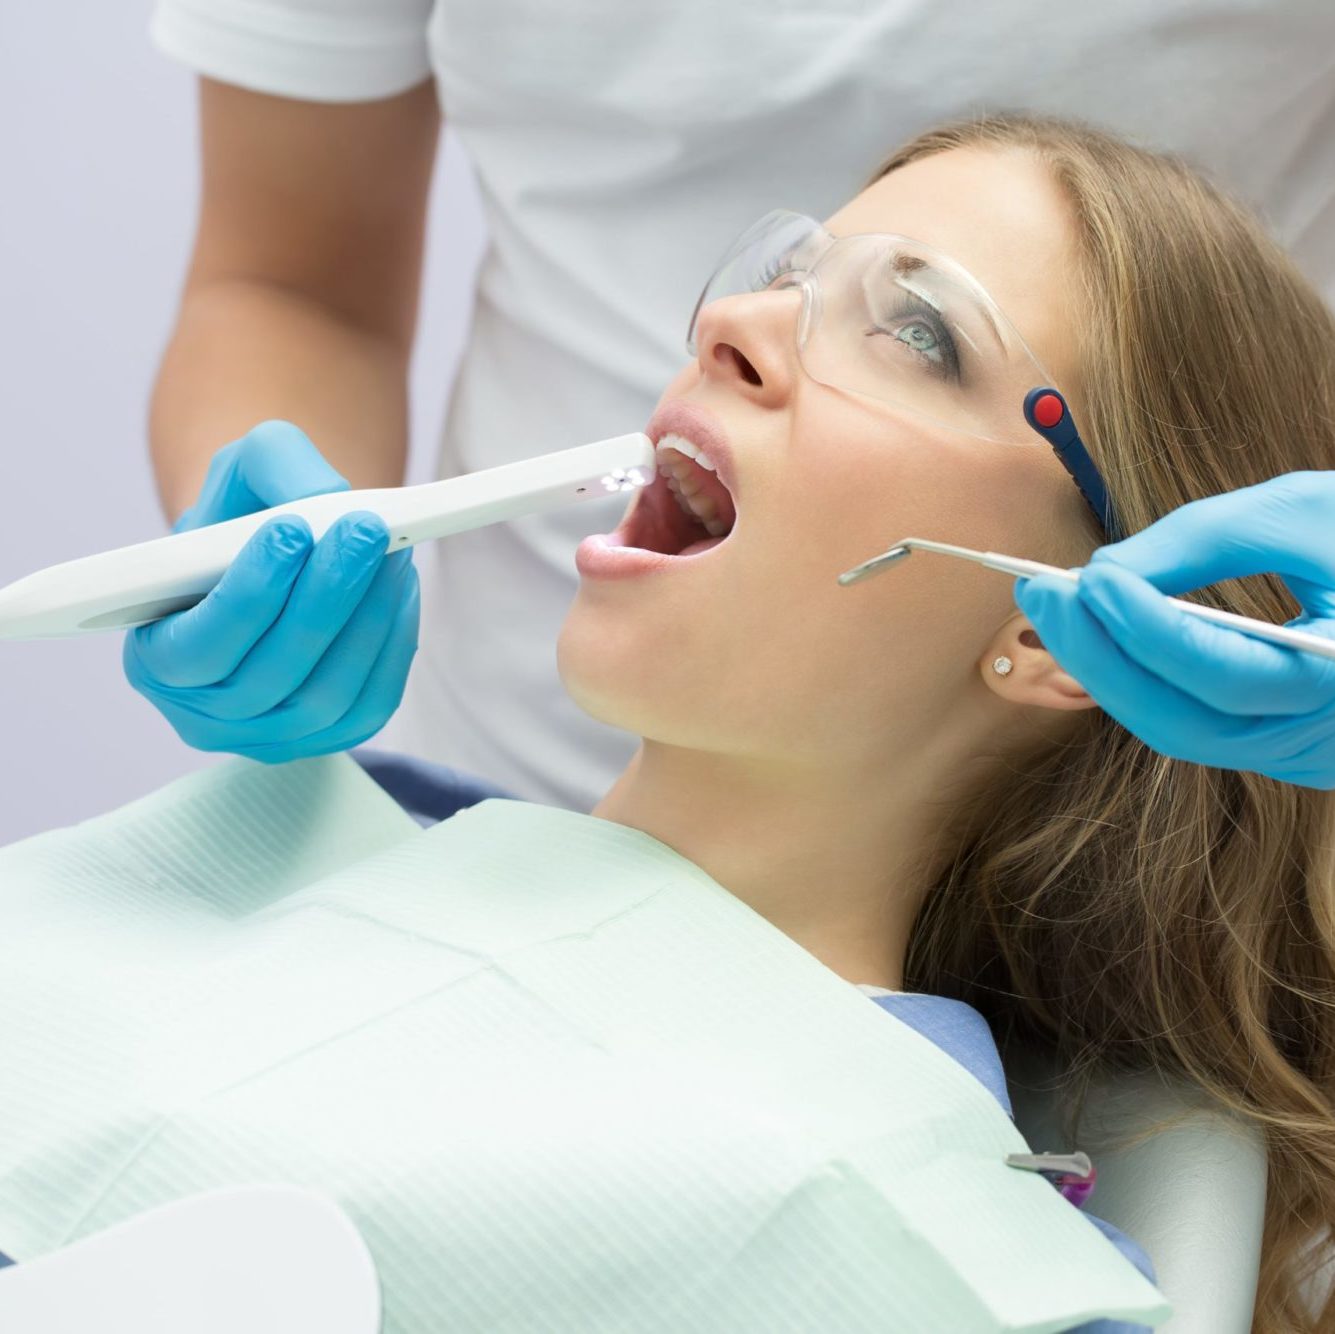 Featured image for “Dental Bonding”